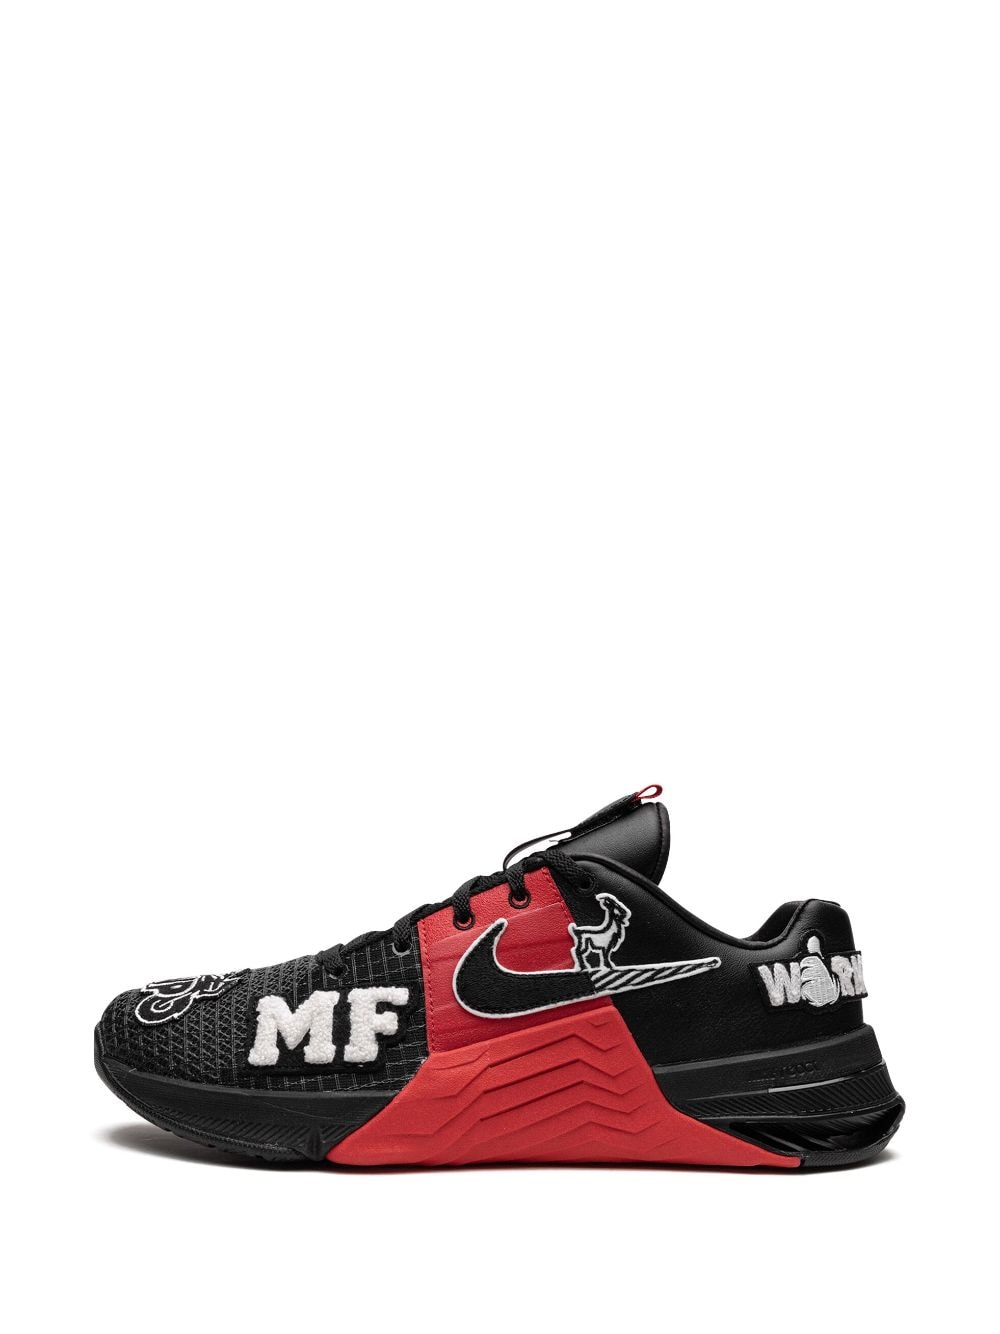 Nike 8 MF "Mat Fraser Black Red" - Farfetch